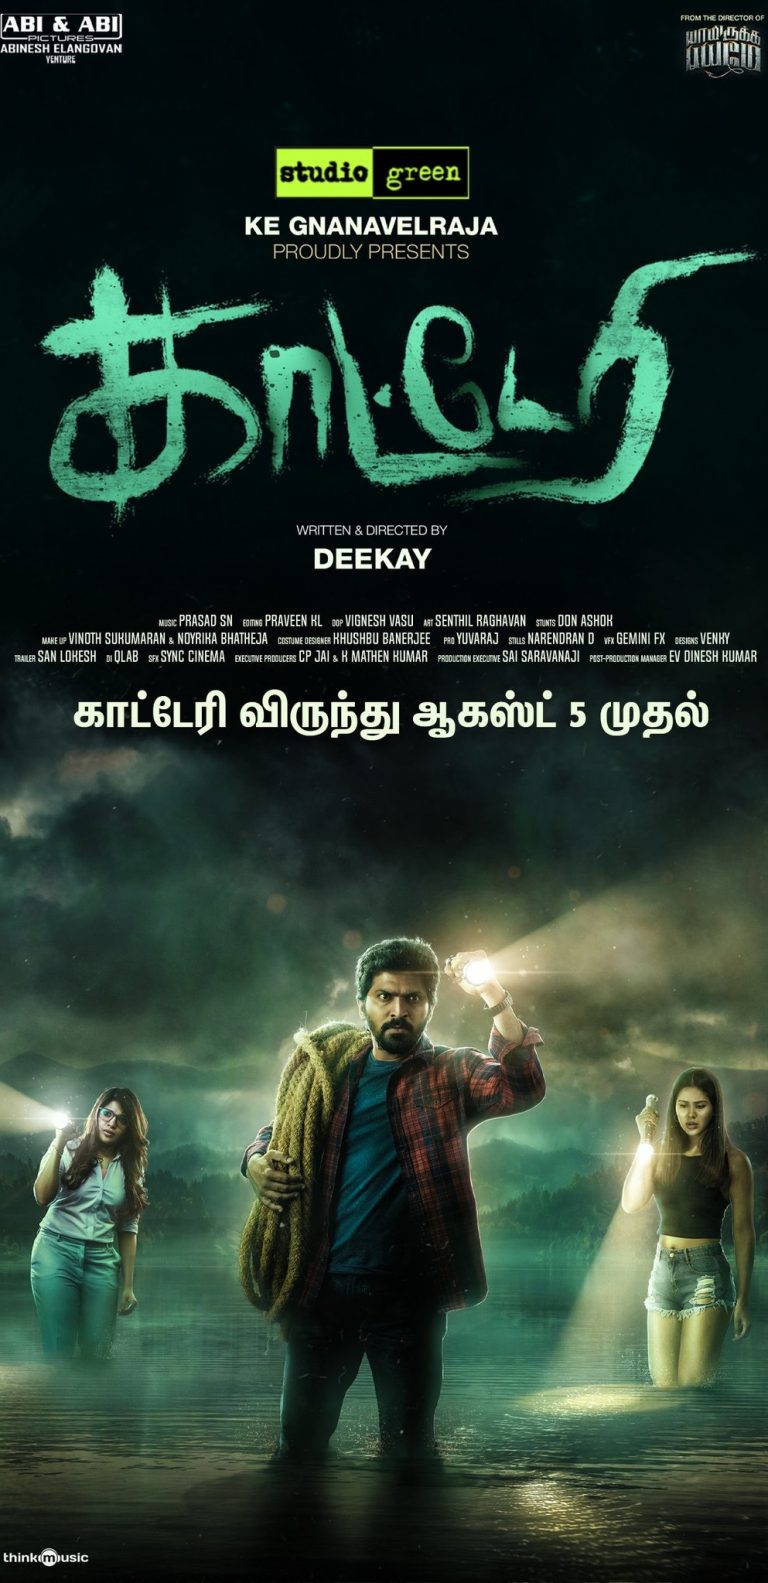 katteri tamil movie review in tamil